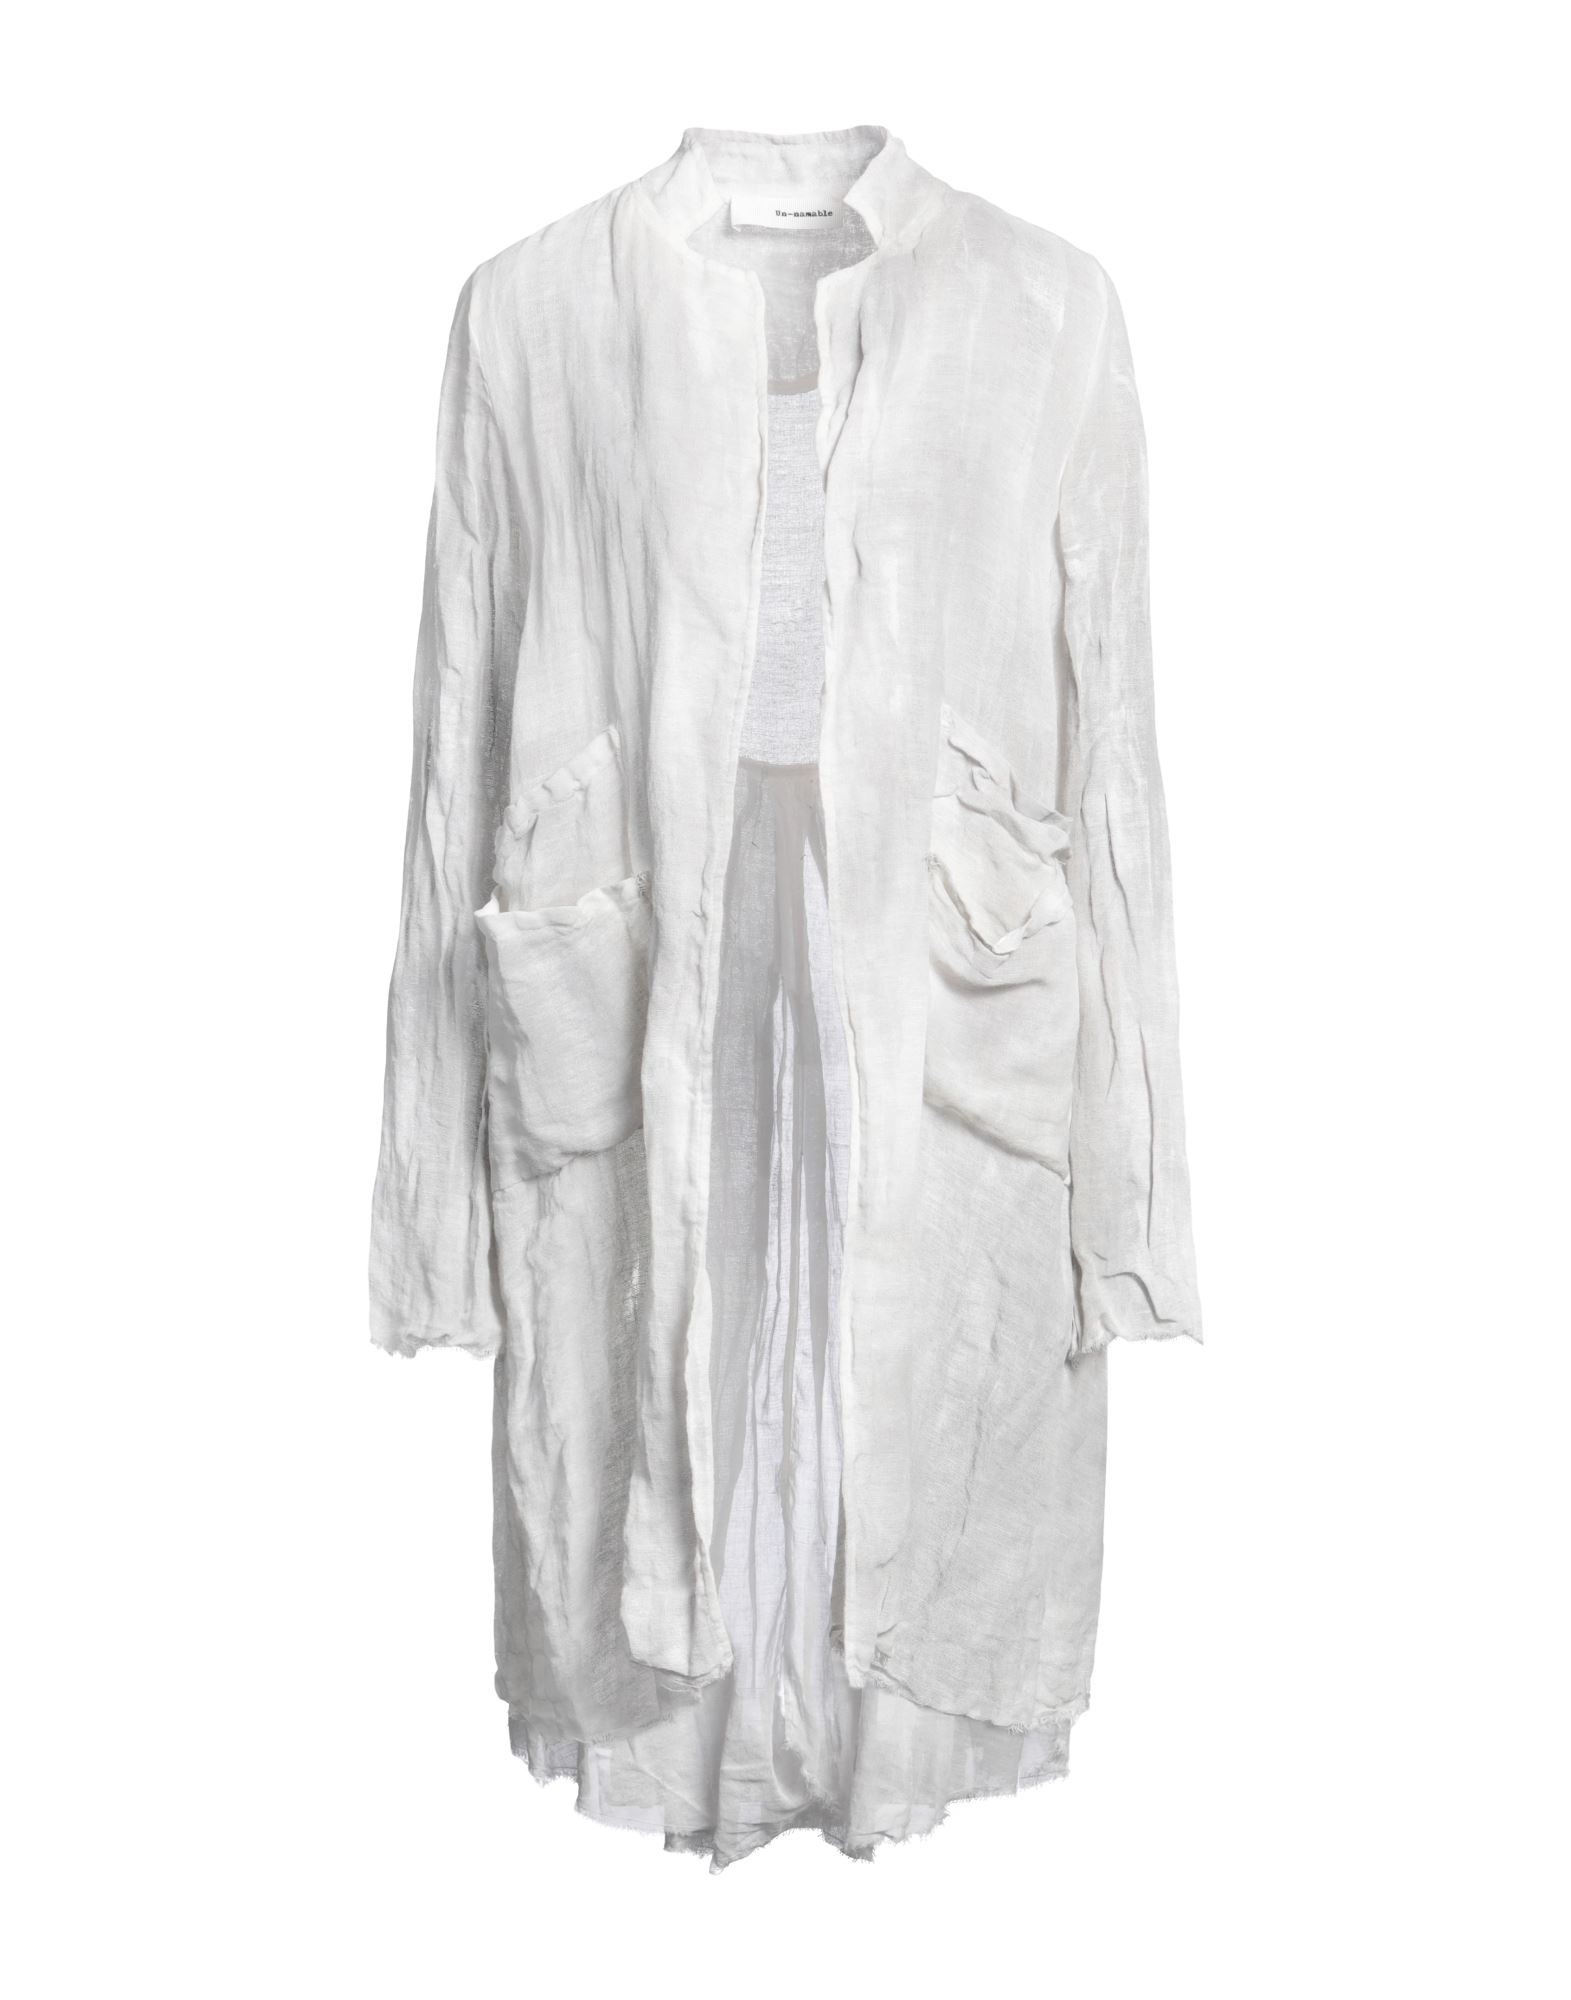 UN-NAMABLE Jacke, Mantel & Trenchcoat Damen Off white von UN-NAMABLE